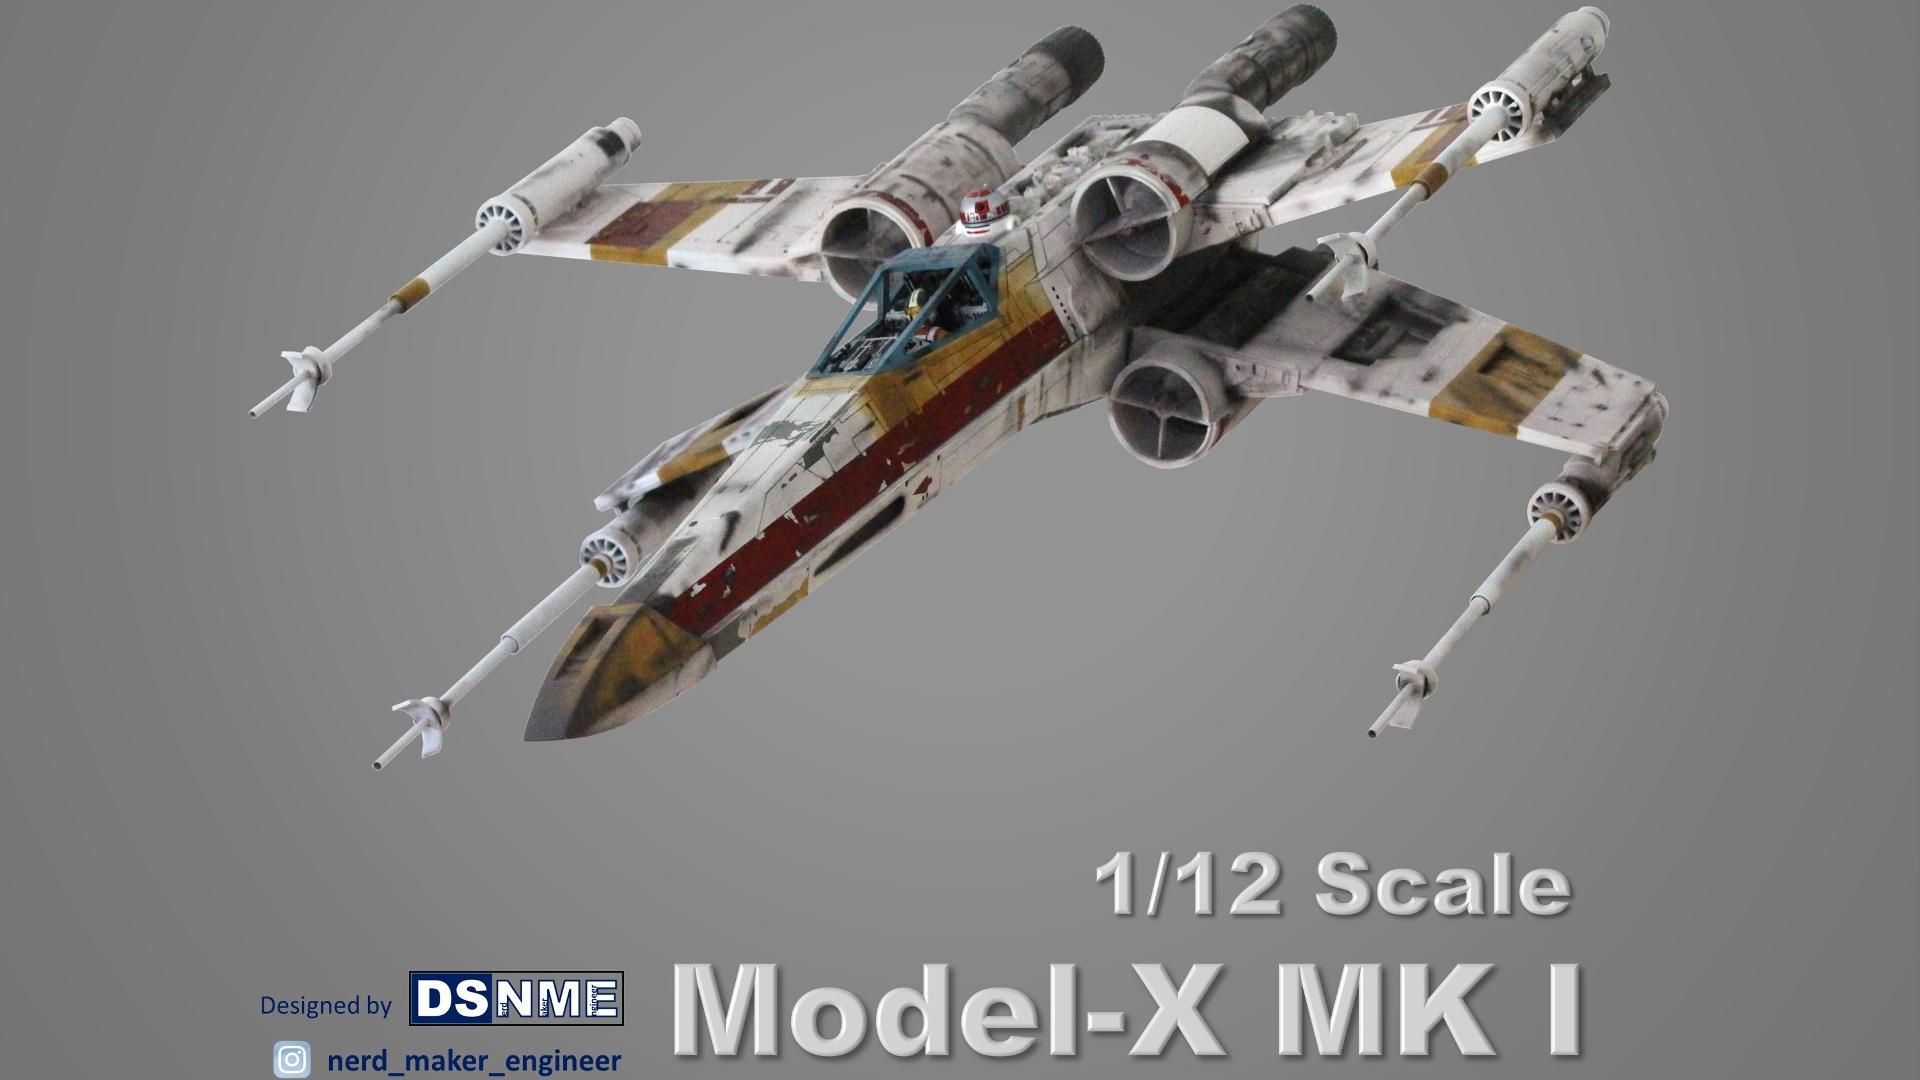 Model-X MK I (1/12 Scale) 3d model